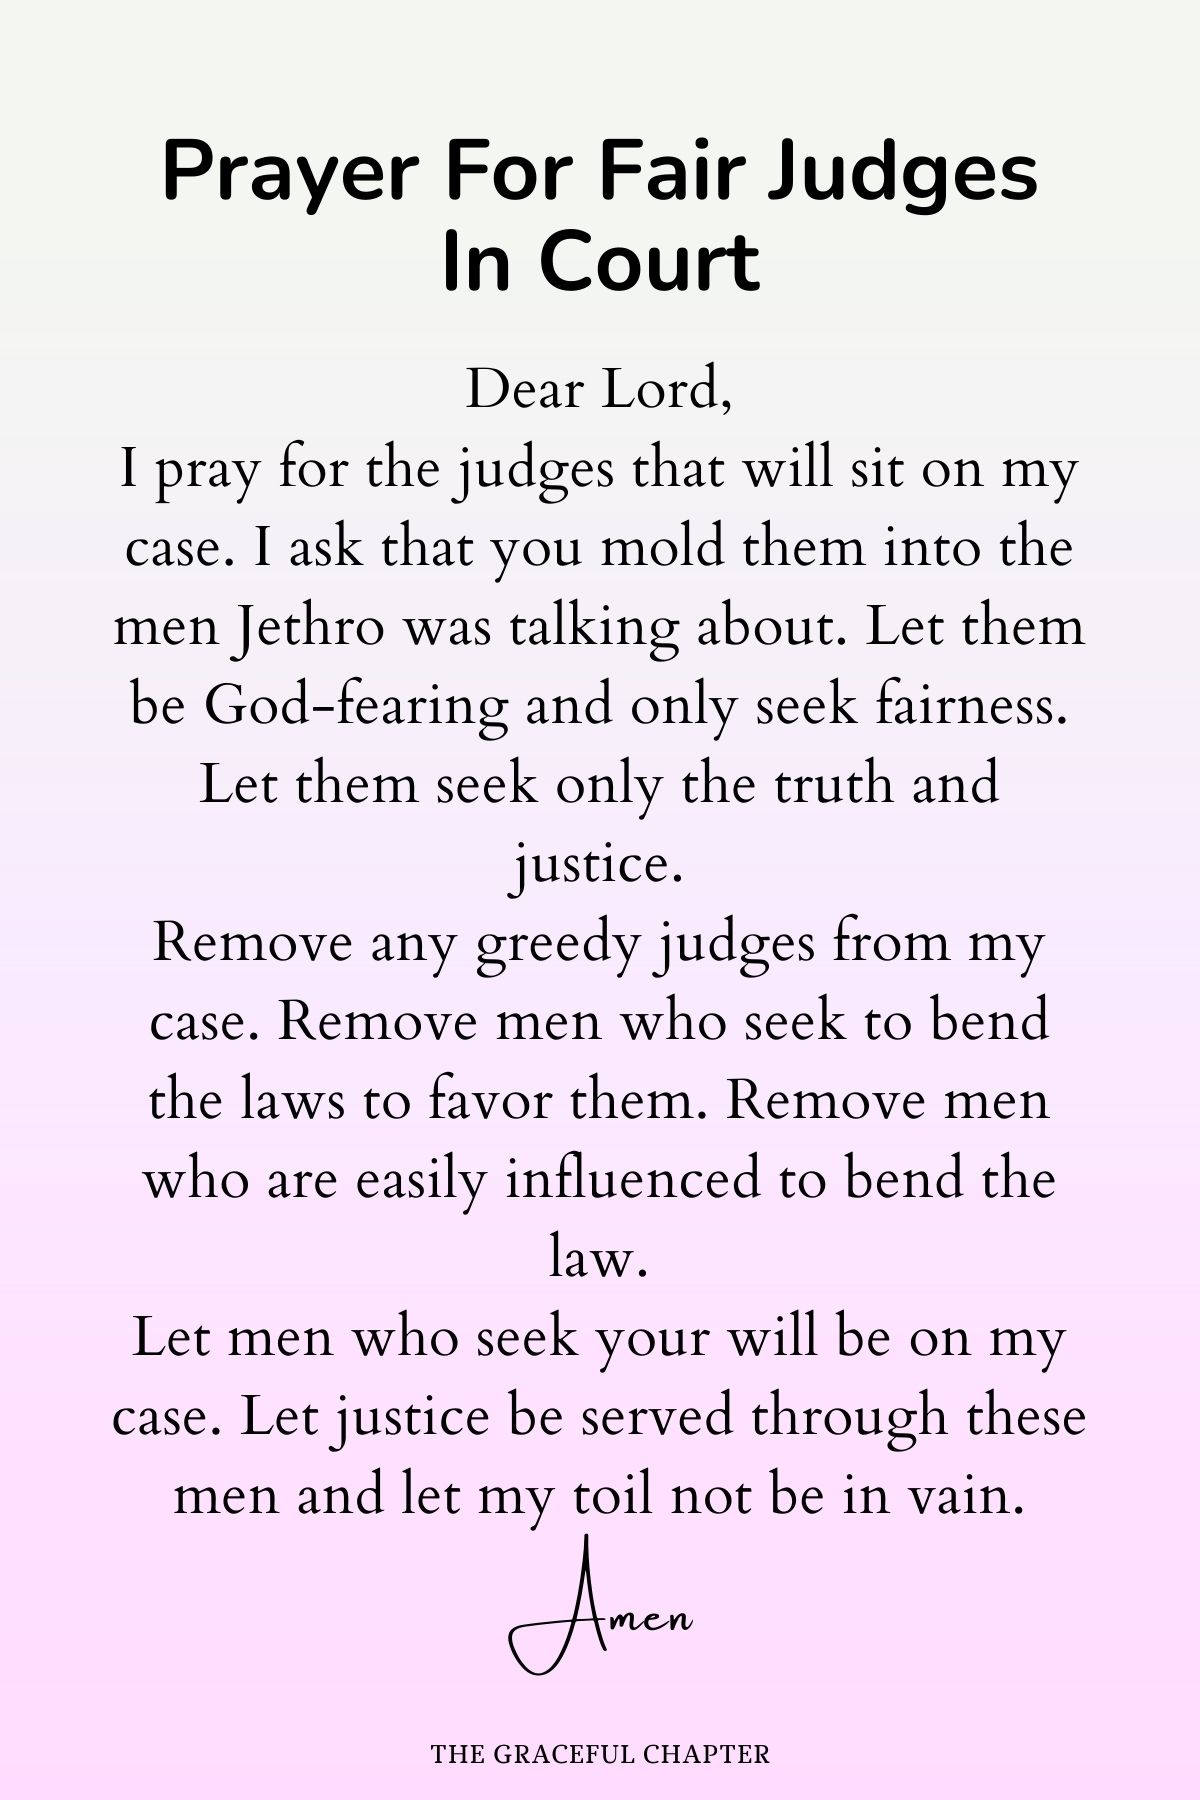 Prayer for fair judges in court